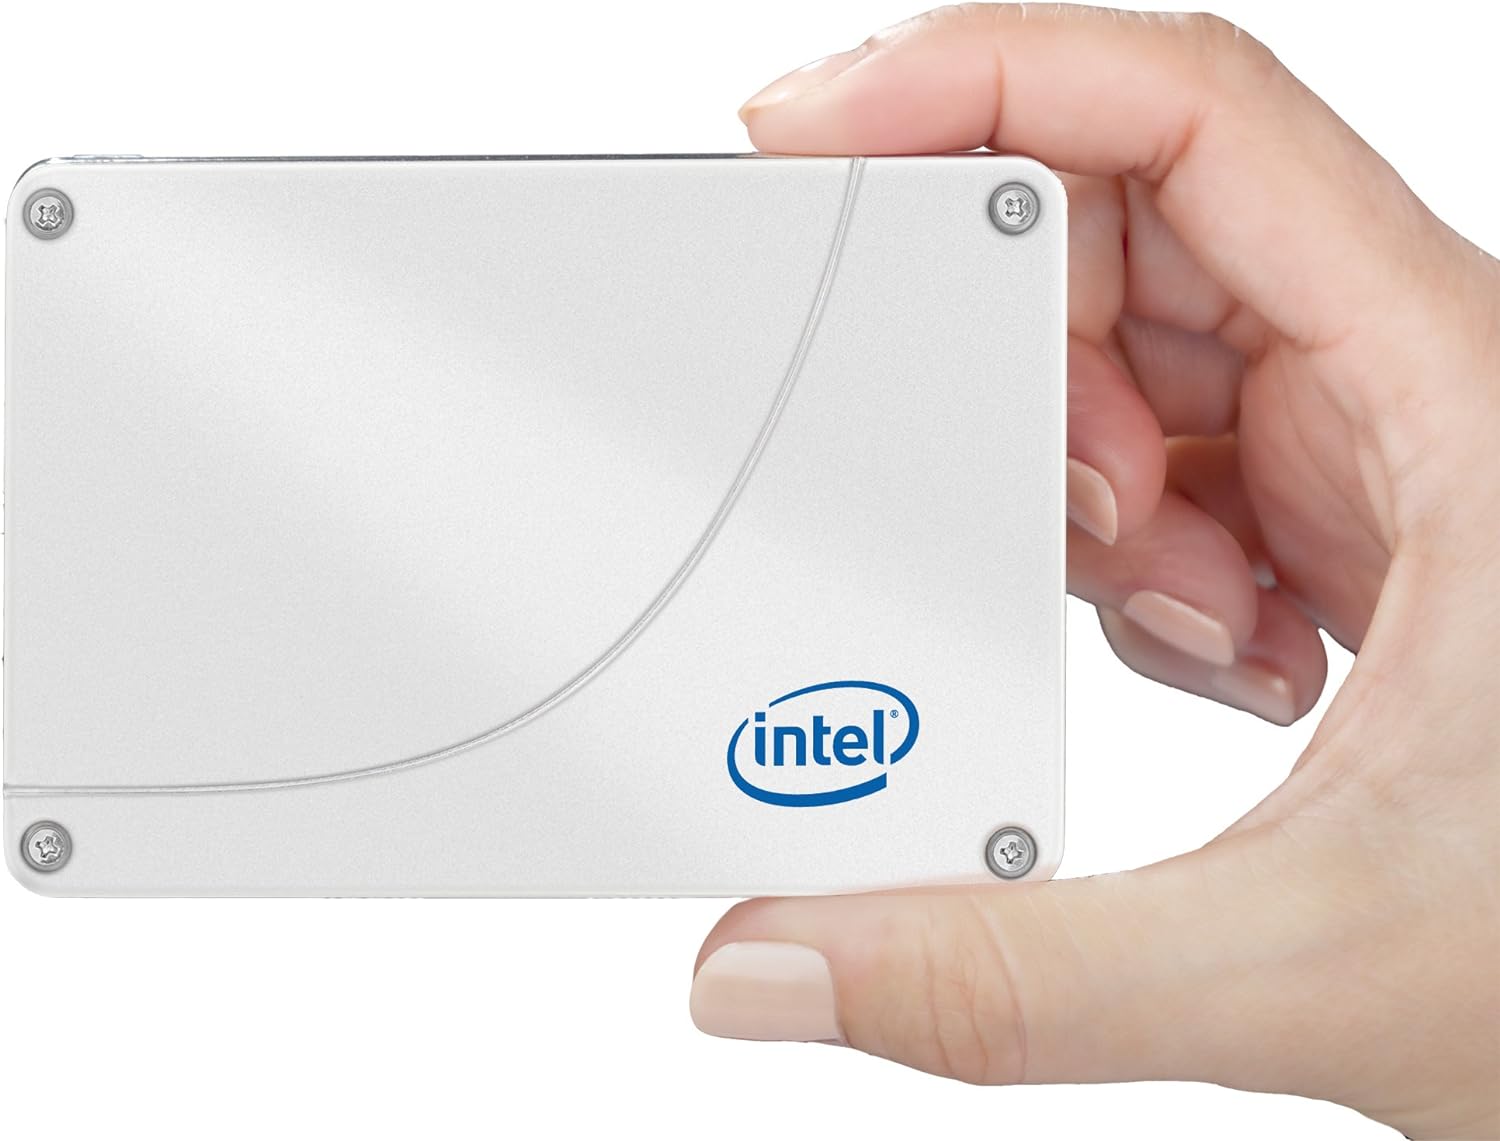 Intel 520 Series Solid-State Drive 60 GB SATA 6 Gb/s 2.5-Inch - SSDSC2CW060A310 (Drive Only)